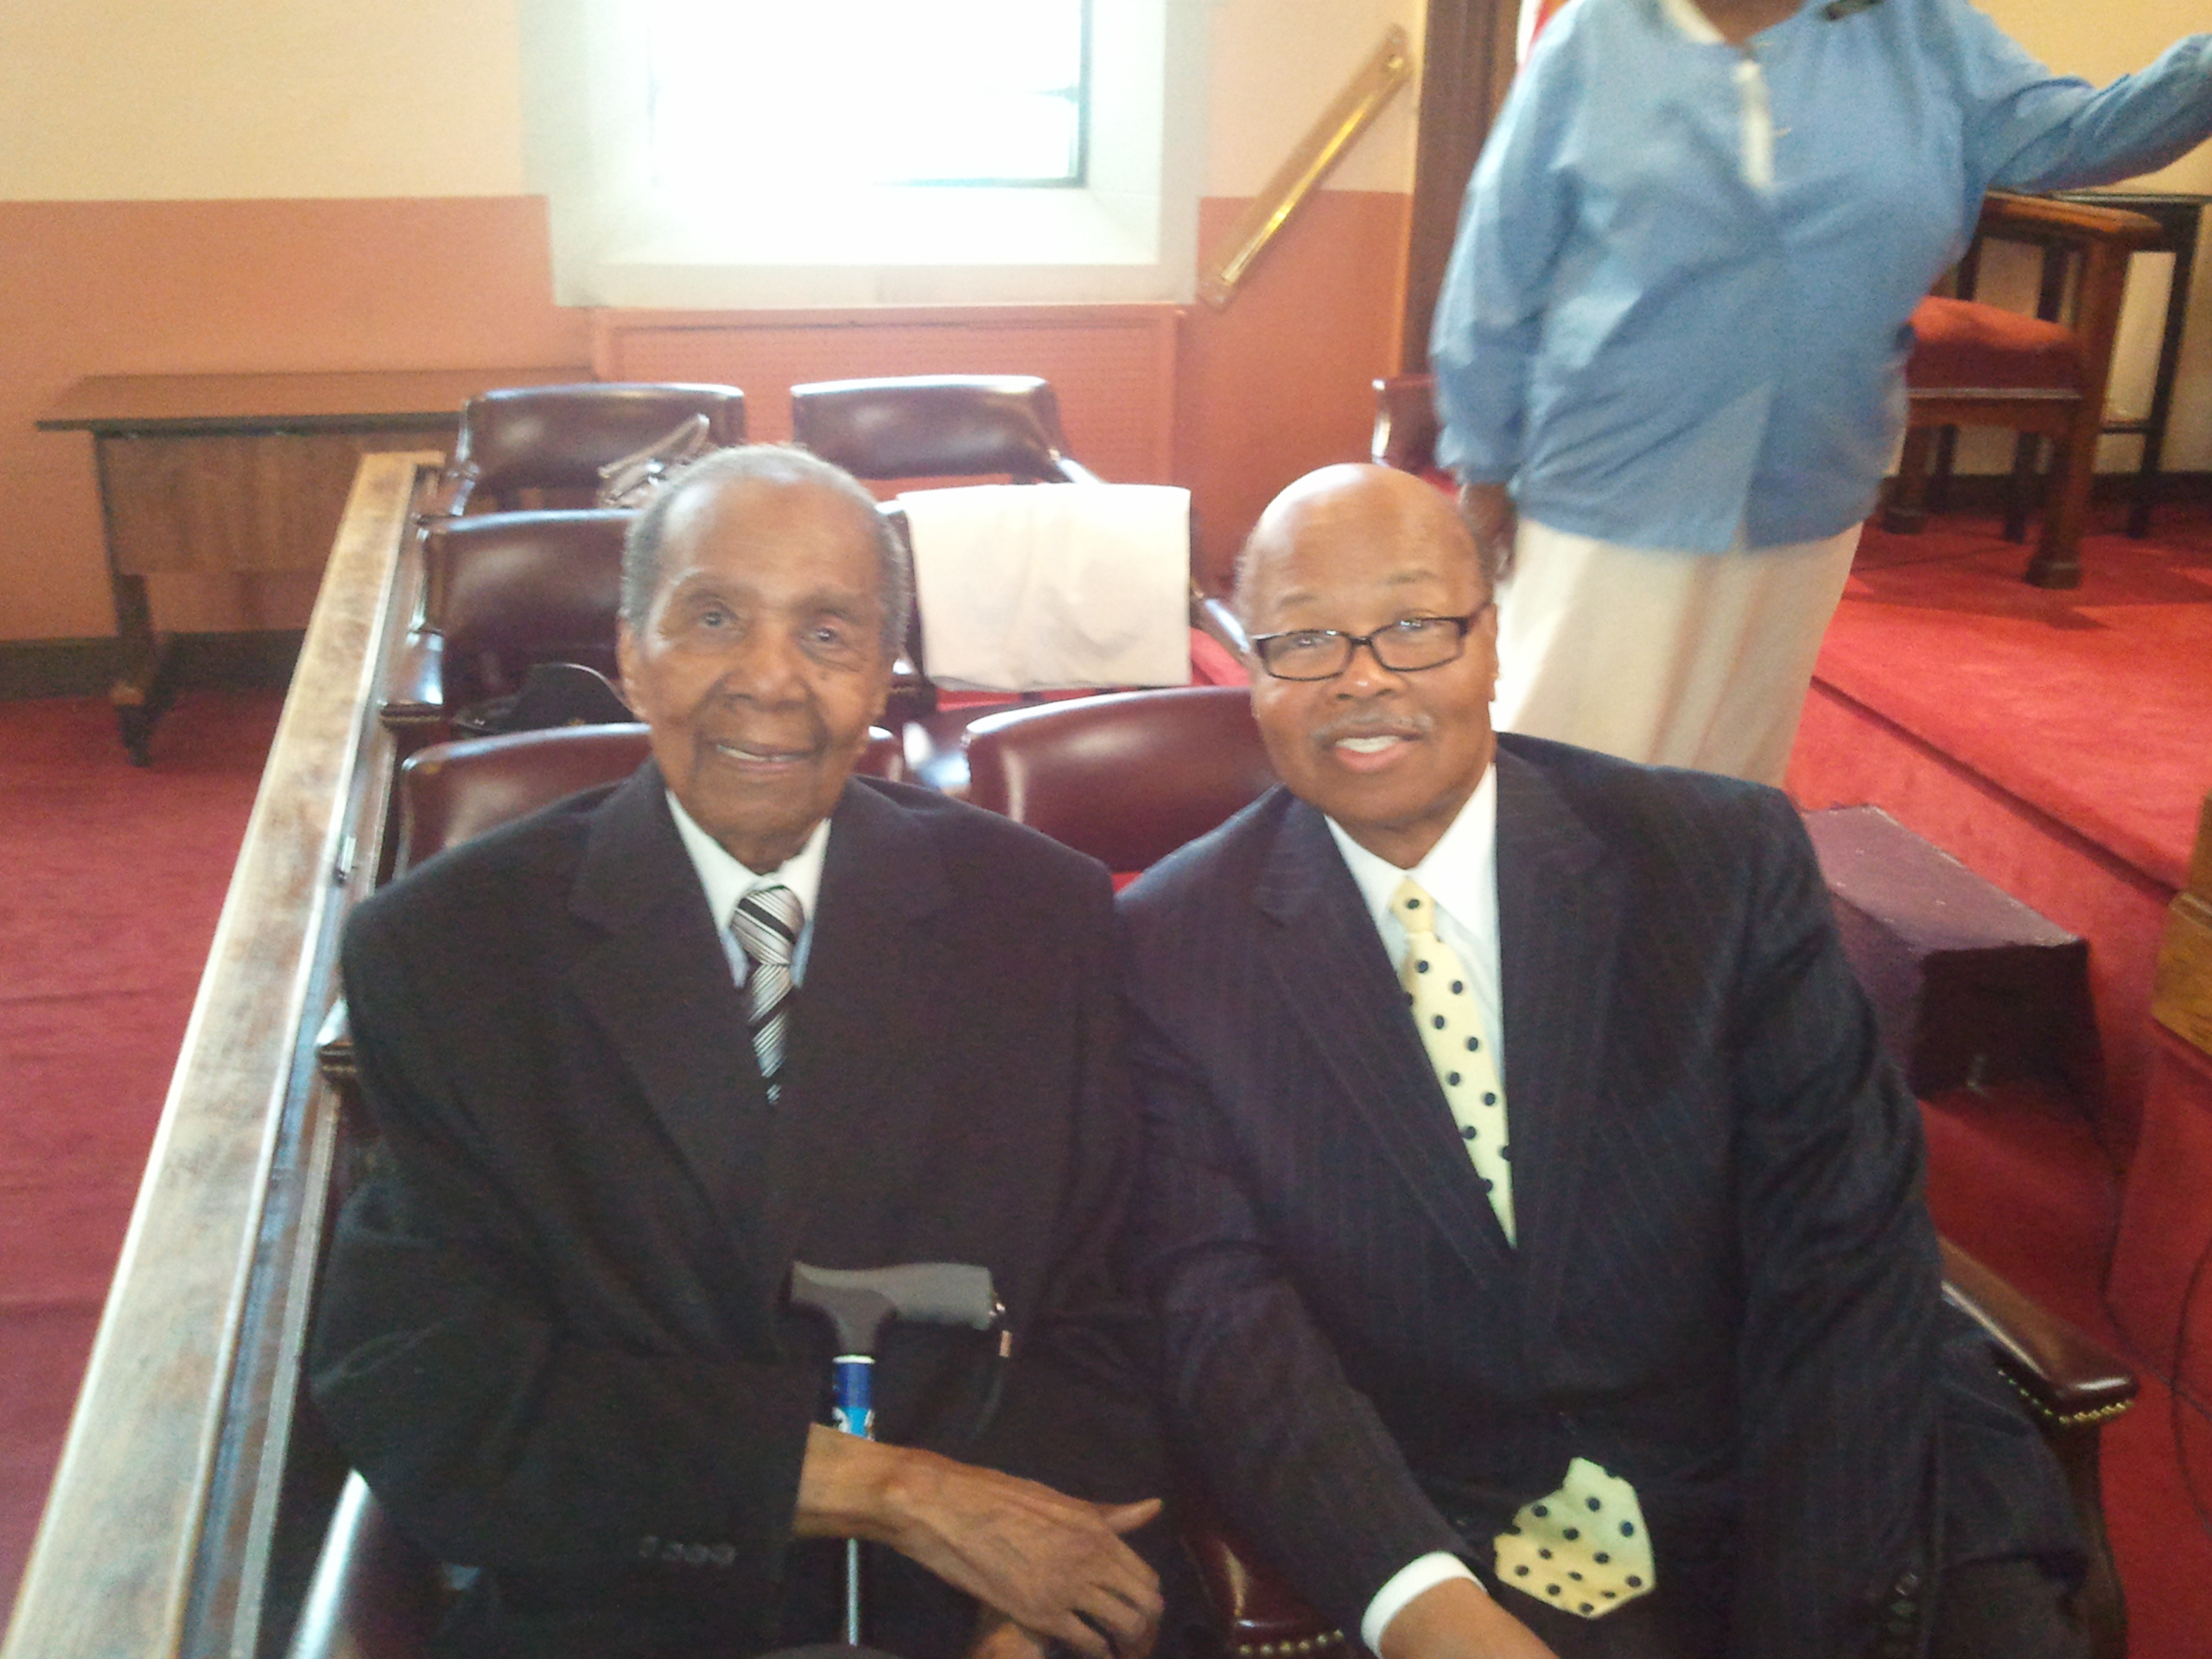 Bishop Burton & Pastor Screven 2010